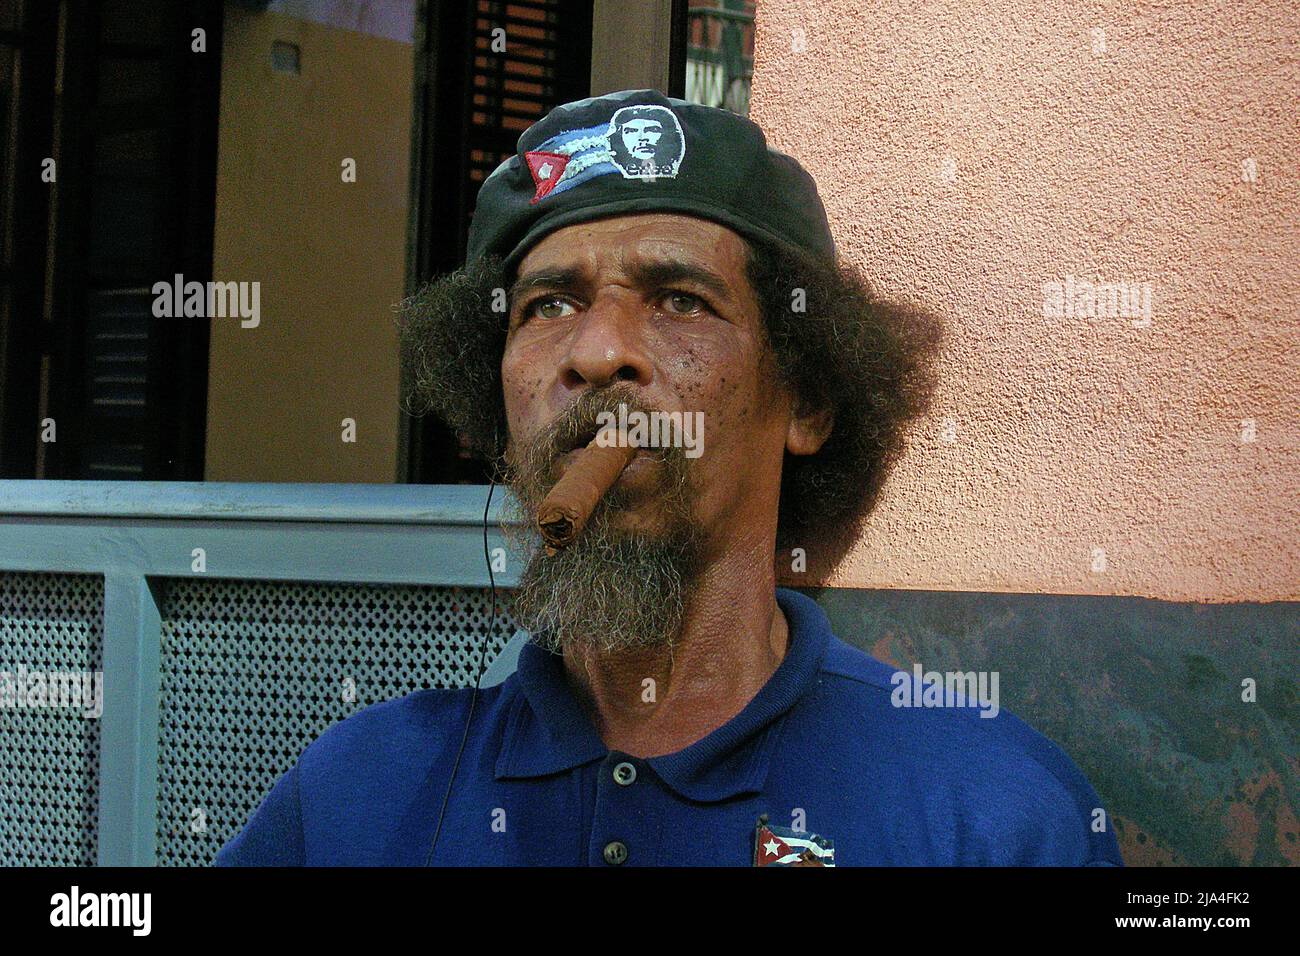 Bearded old cuban man with Che Guevara cap smoking a big cigar, Cathedral Plaza, historic old town of Havana, Cuba, Caribbean Stock Photo